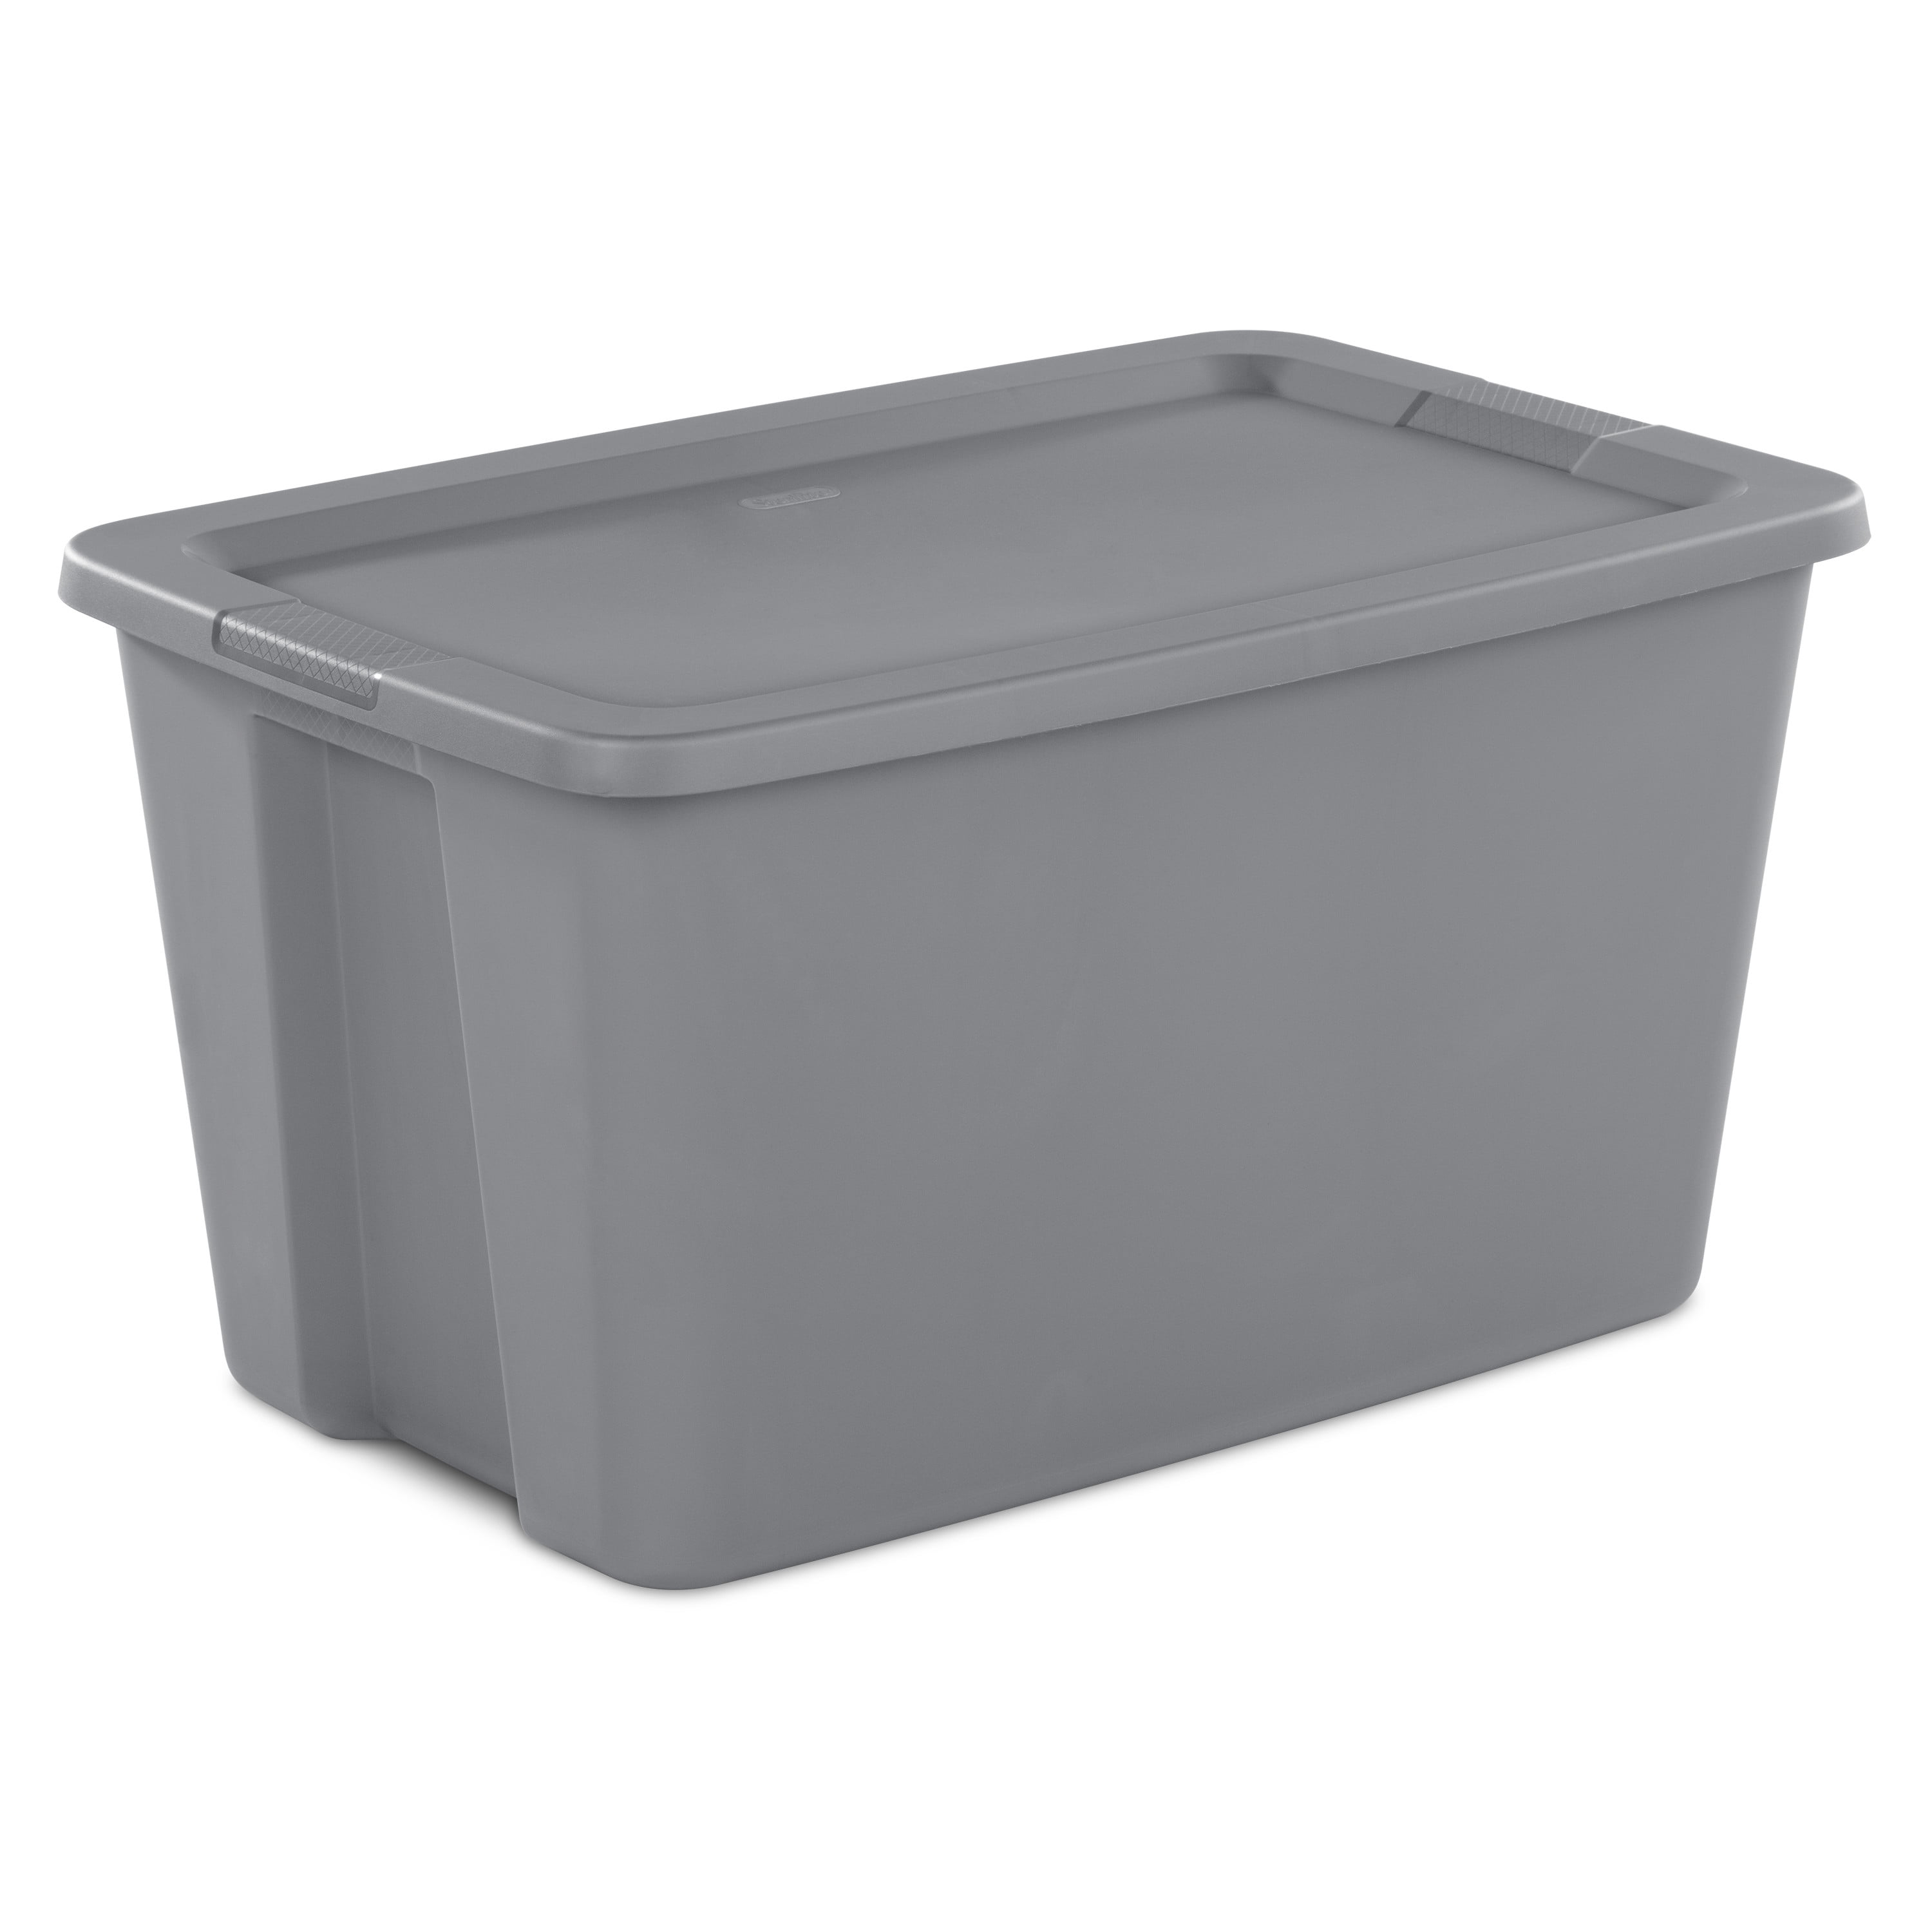 8 PLASTIC STORAGE CONTAINERS 18 Gallon Sterilite Stackable Tote Box Bin With Lid Fuchsia for sale online 